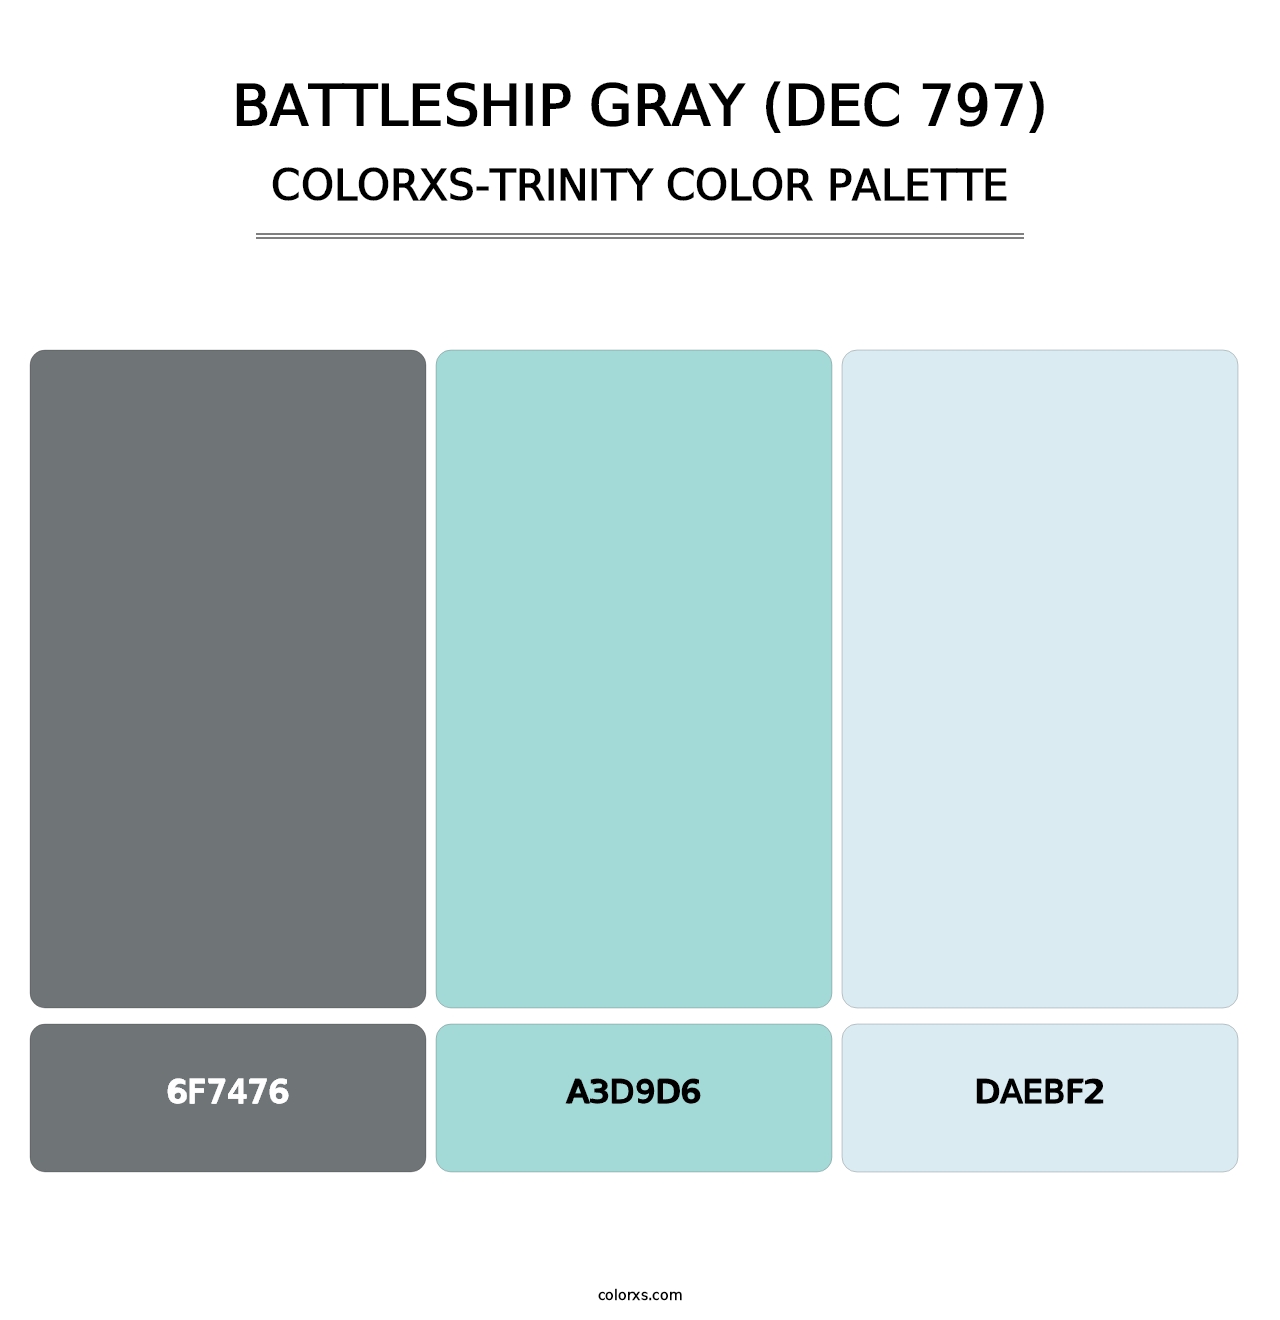 Battleship Gray (DEC 797) - Colorxs Trinity Palette